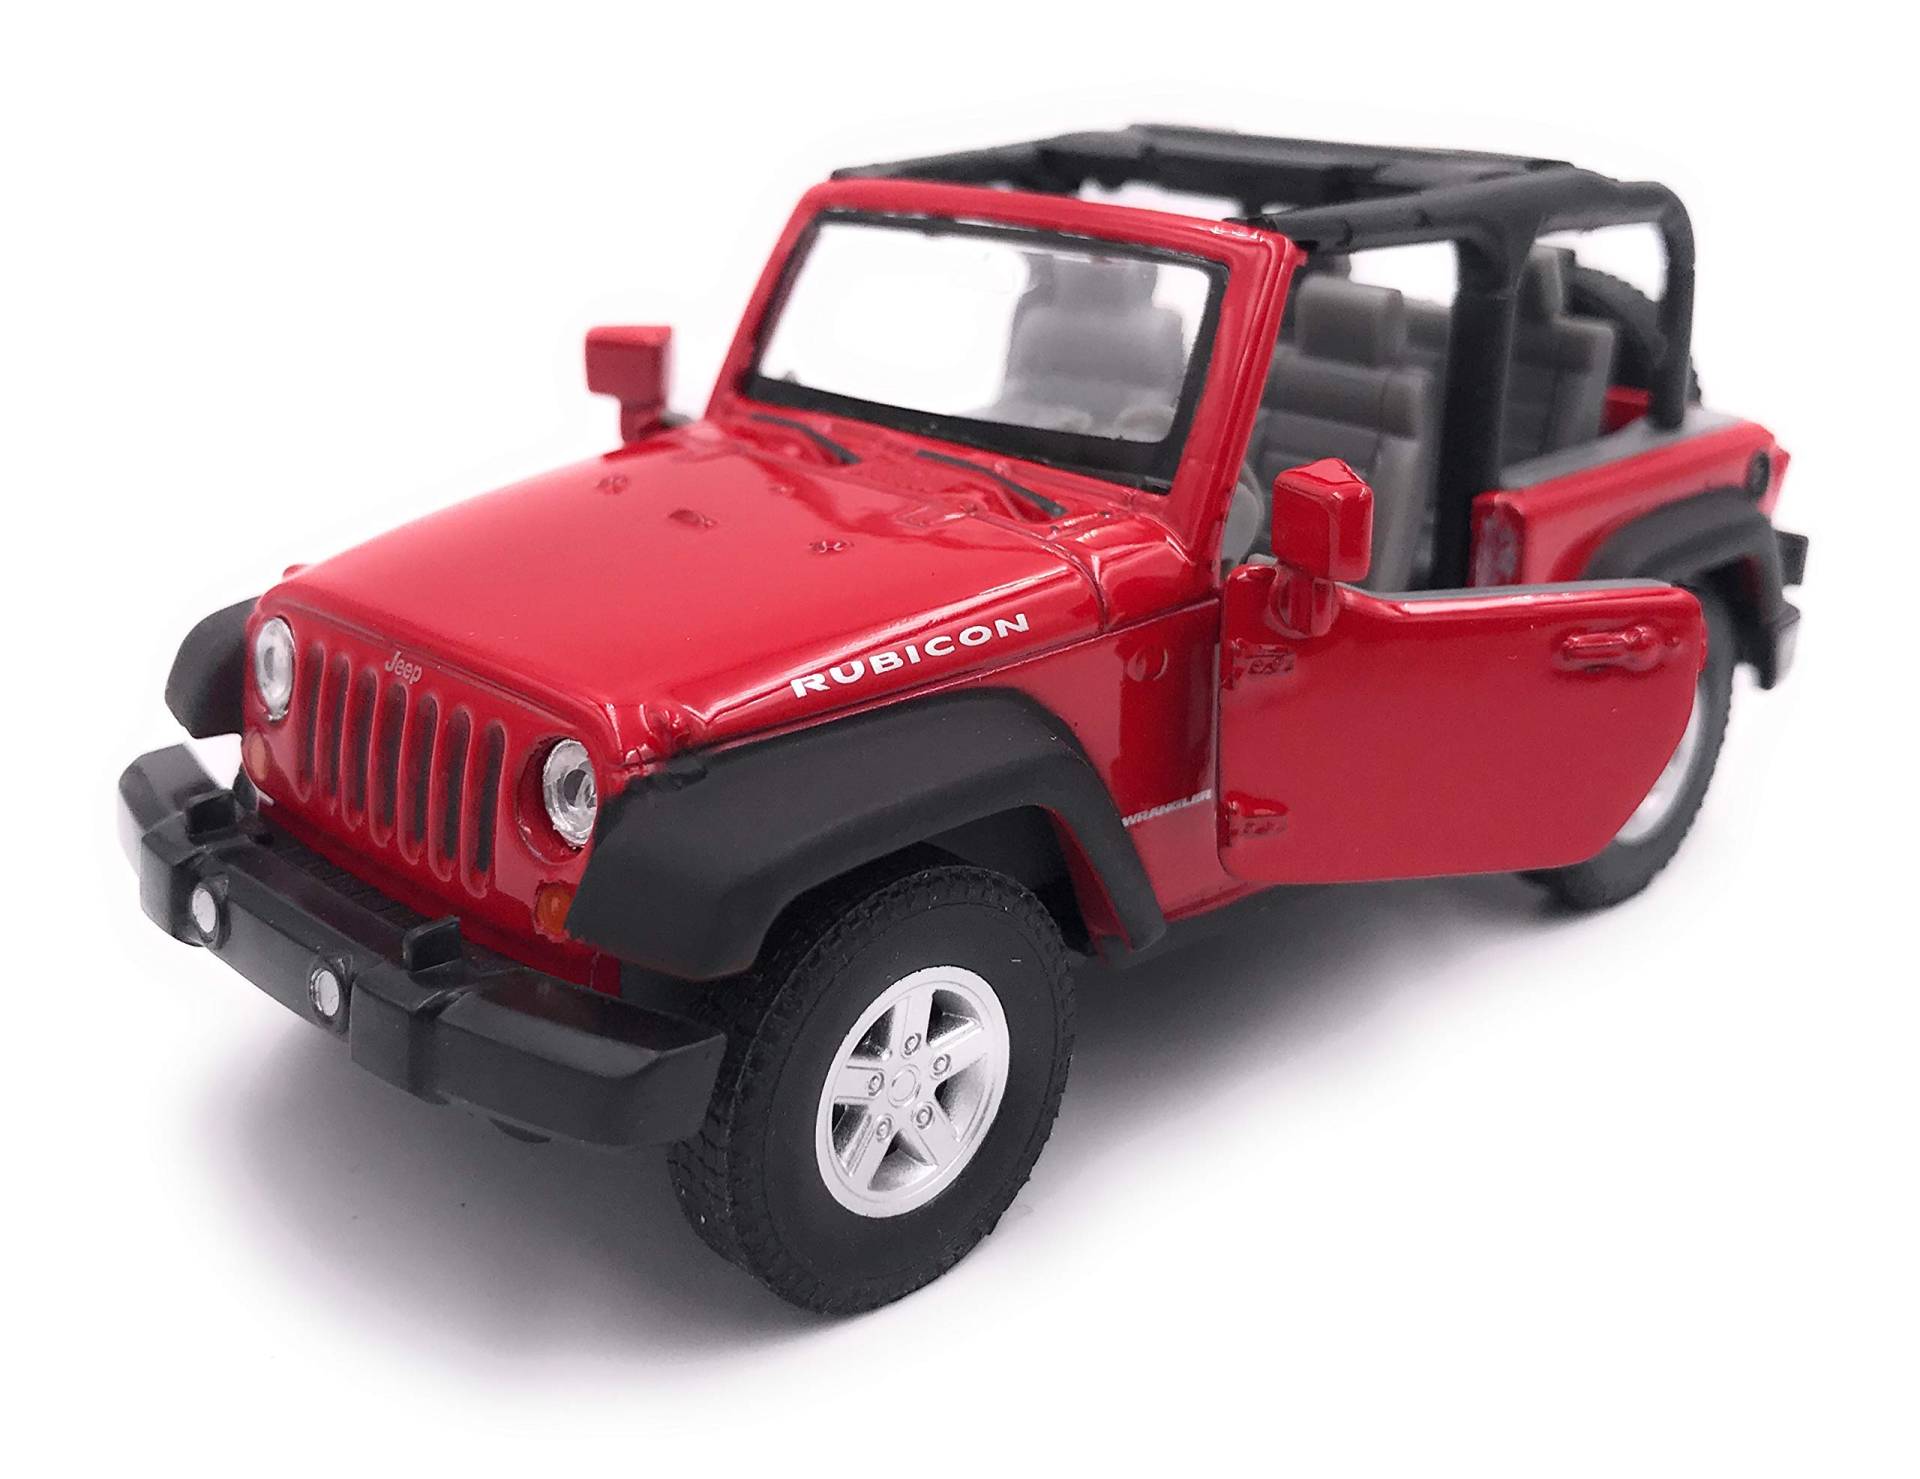 H-Customs Jeep Wrangler Rubicon Modellauto Auto Lizenzprodukt 1:34-1:39 rot offen von H-Customs